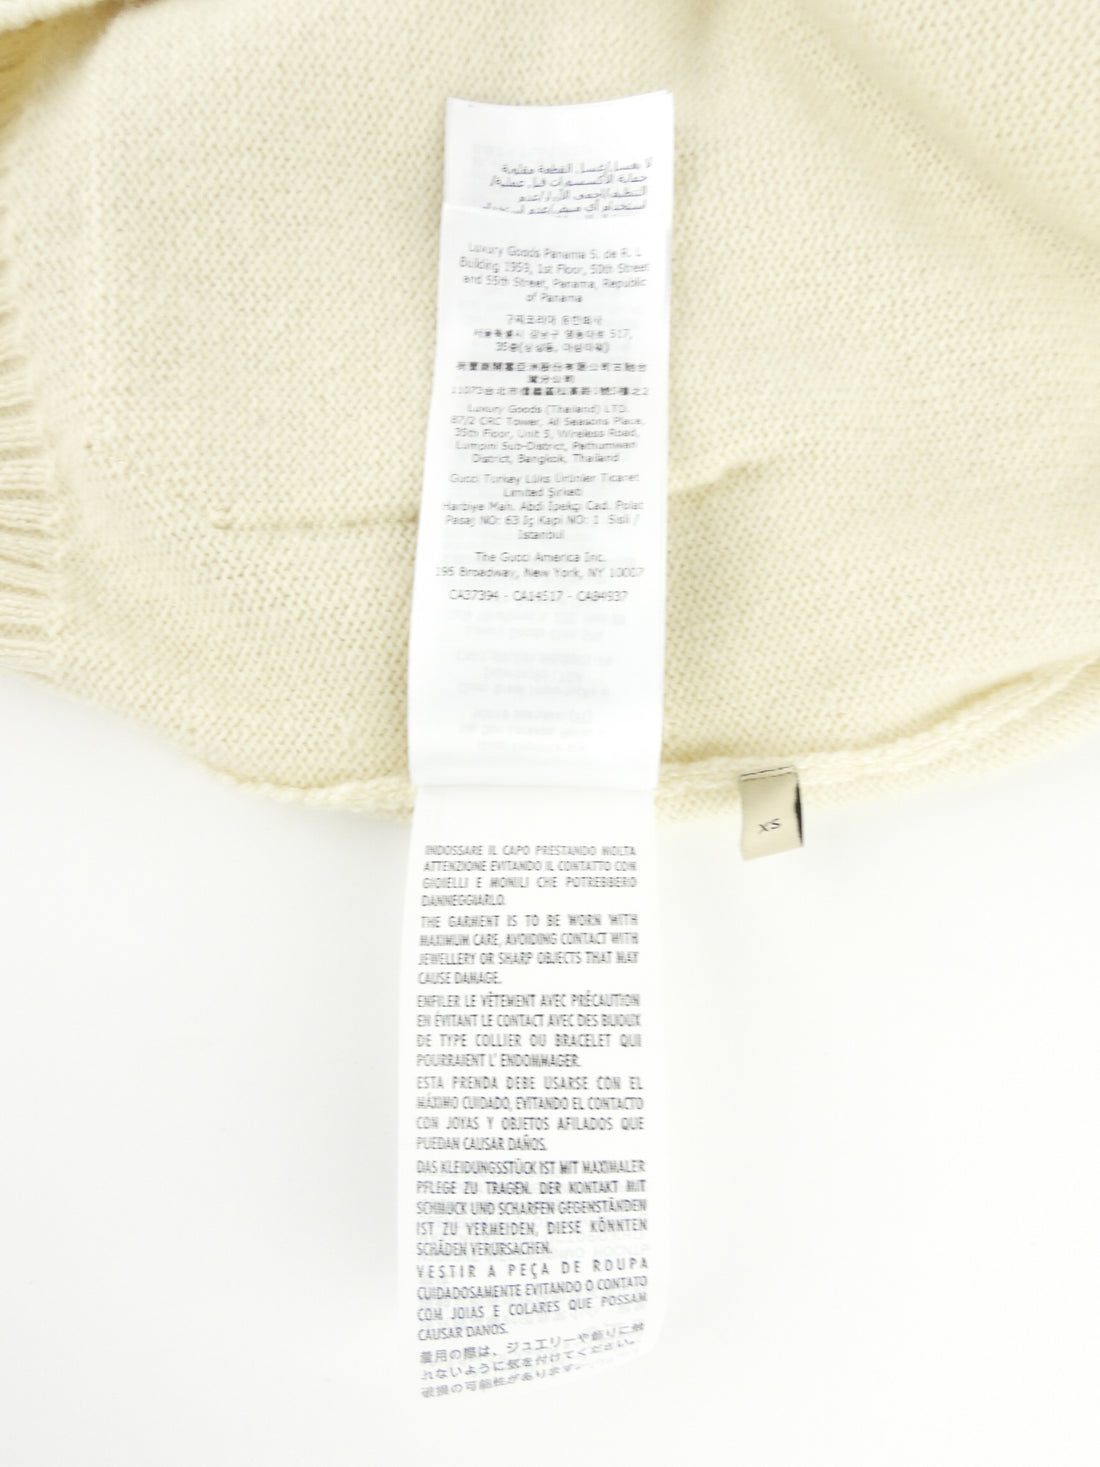 Gucci Cream Cashmere GG Chain Detail Knit Cardigan - XS